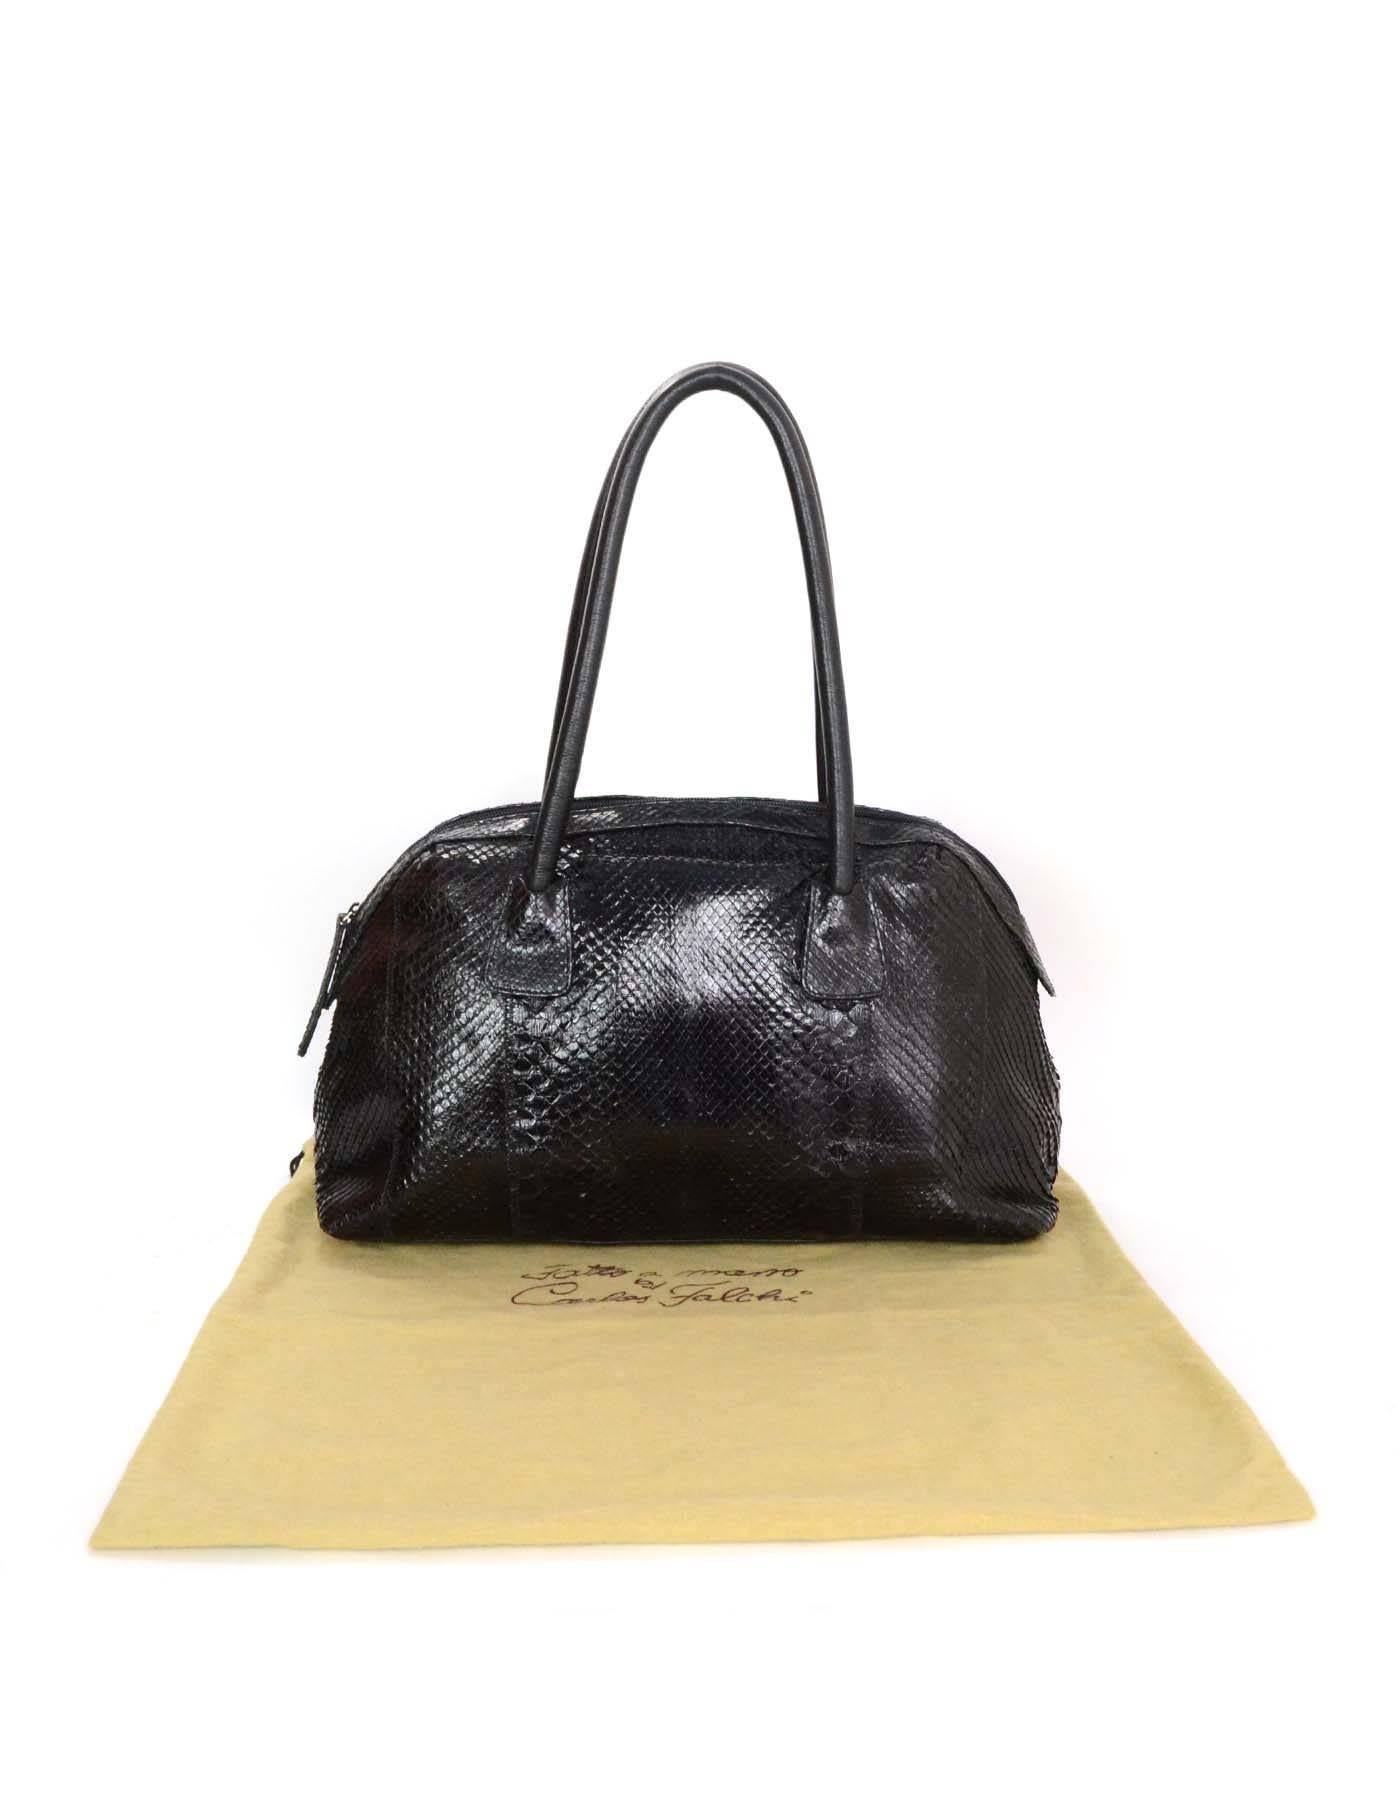 Carlos Falchi Black Python Shoulder Bag rt. $2, 895 4